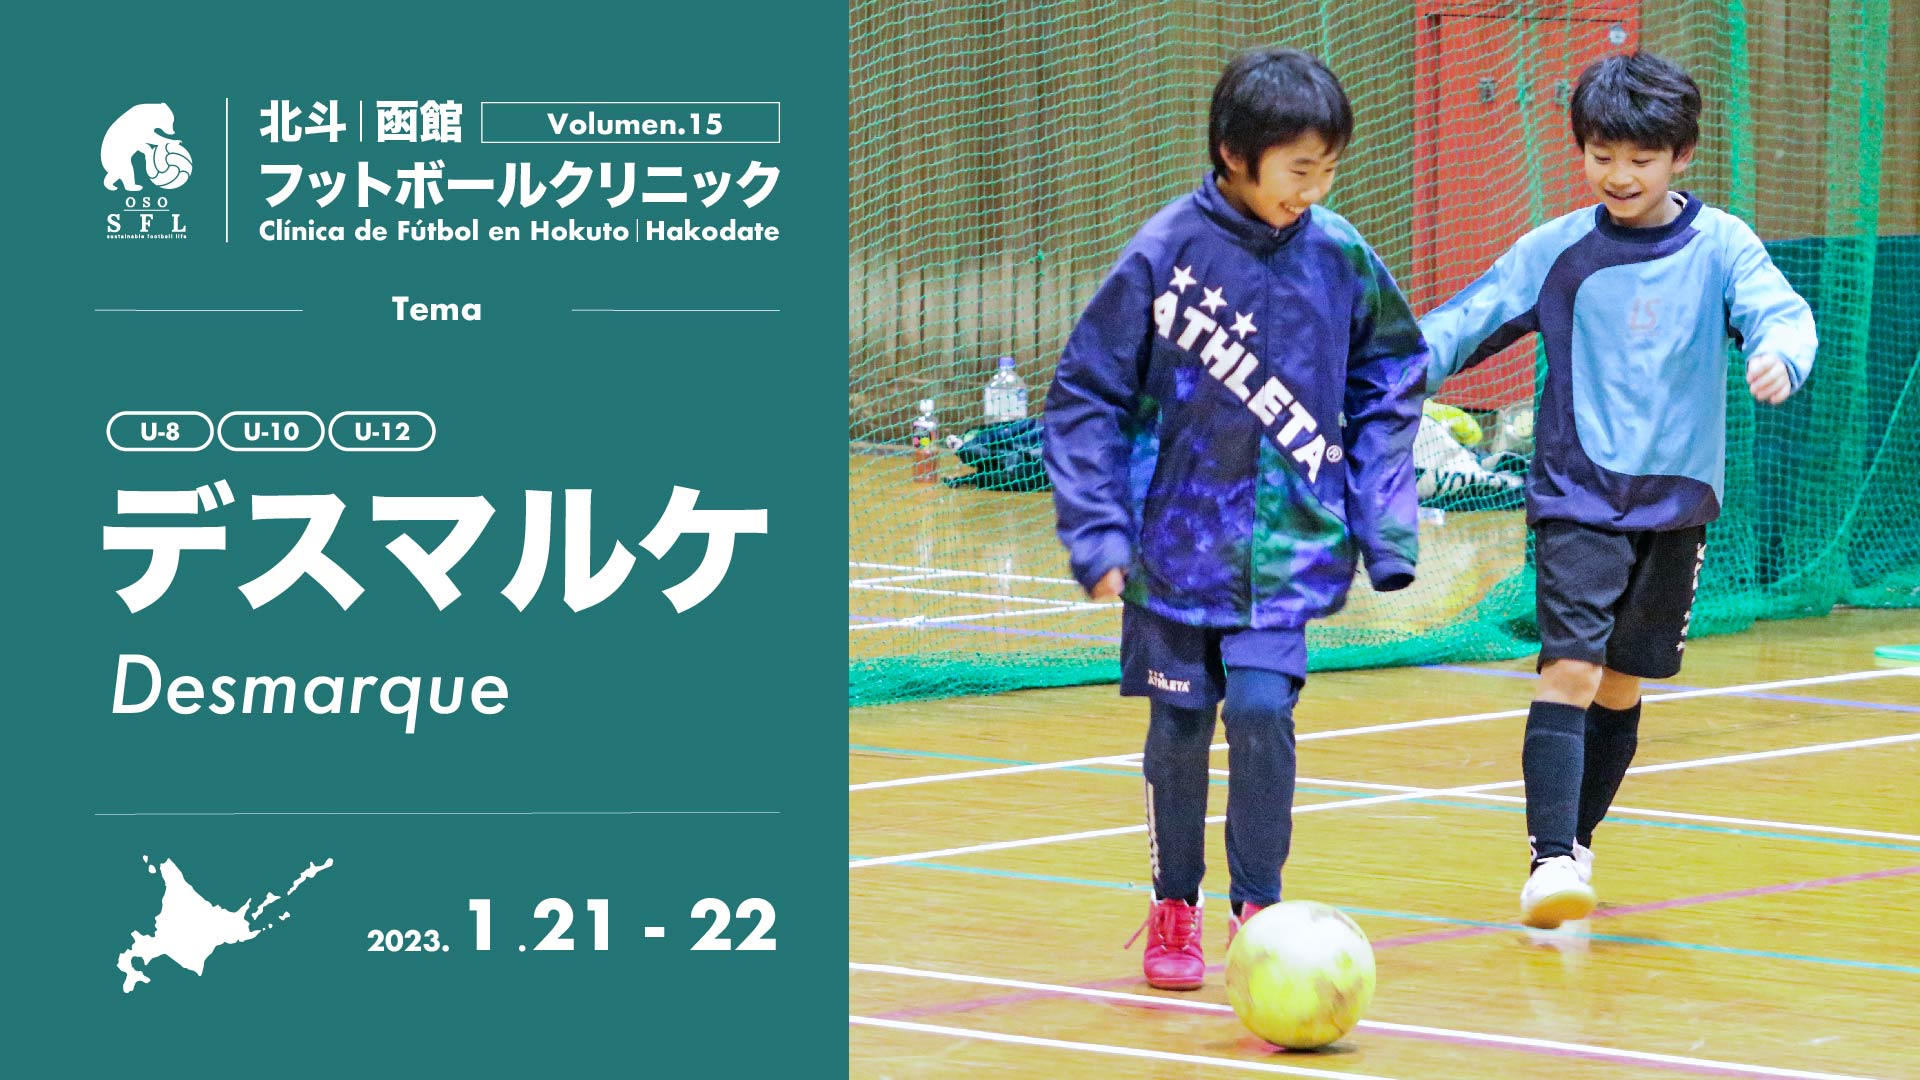 20221212_notice-hokuto-hakodate-football-clinic-2023-vol15_1920px